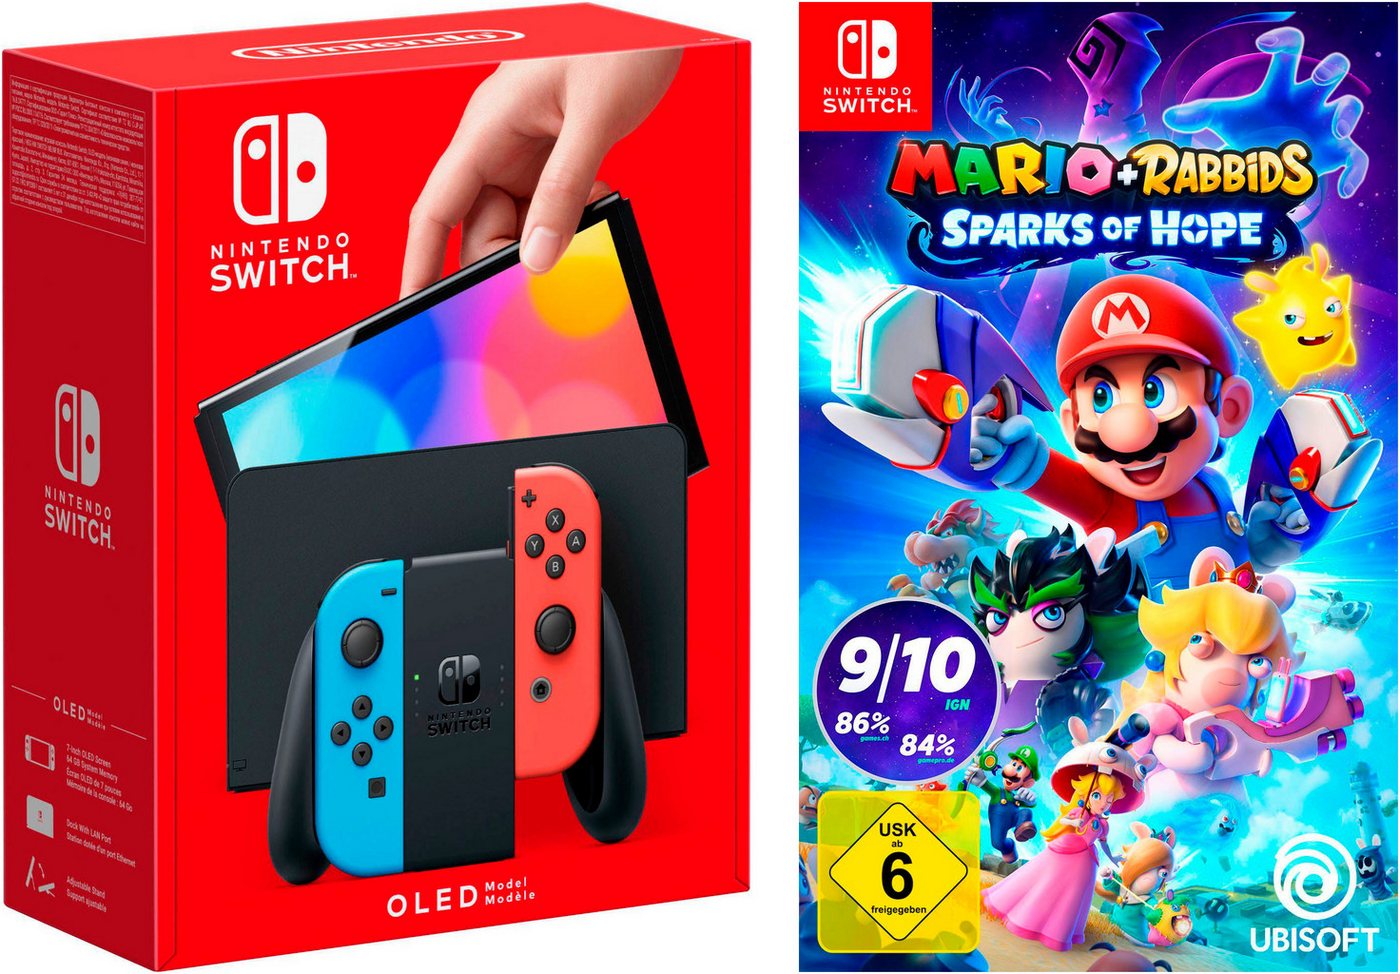 Nintendo Switch OLED + Mario + Rabbids: Sparks of Hope von Nintendo Switch